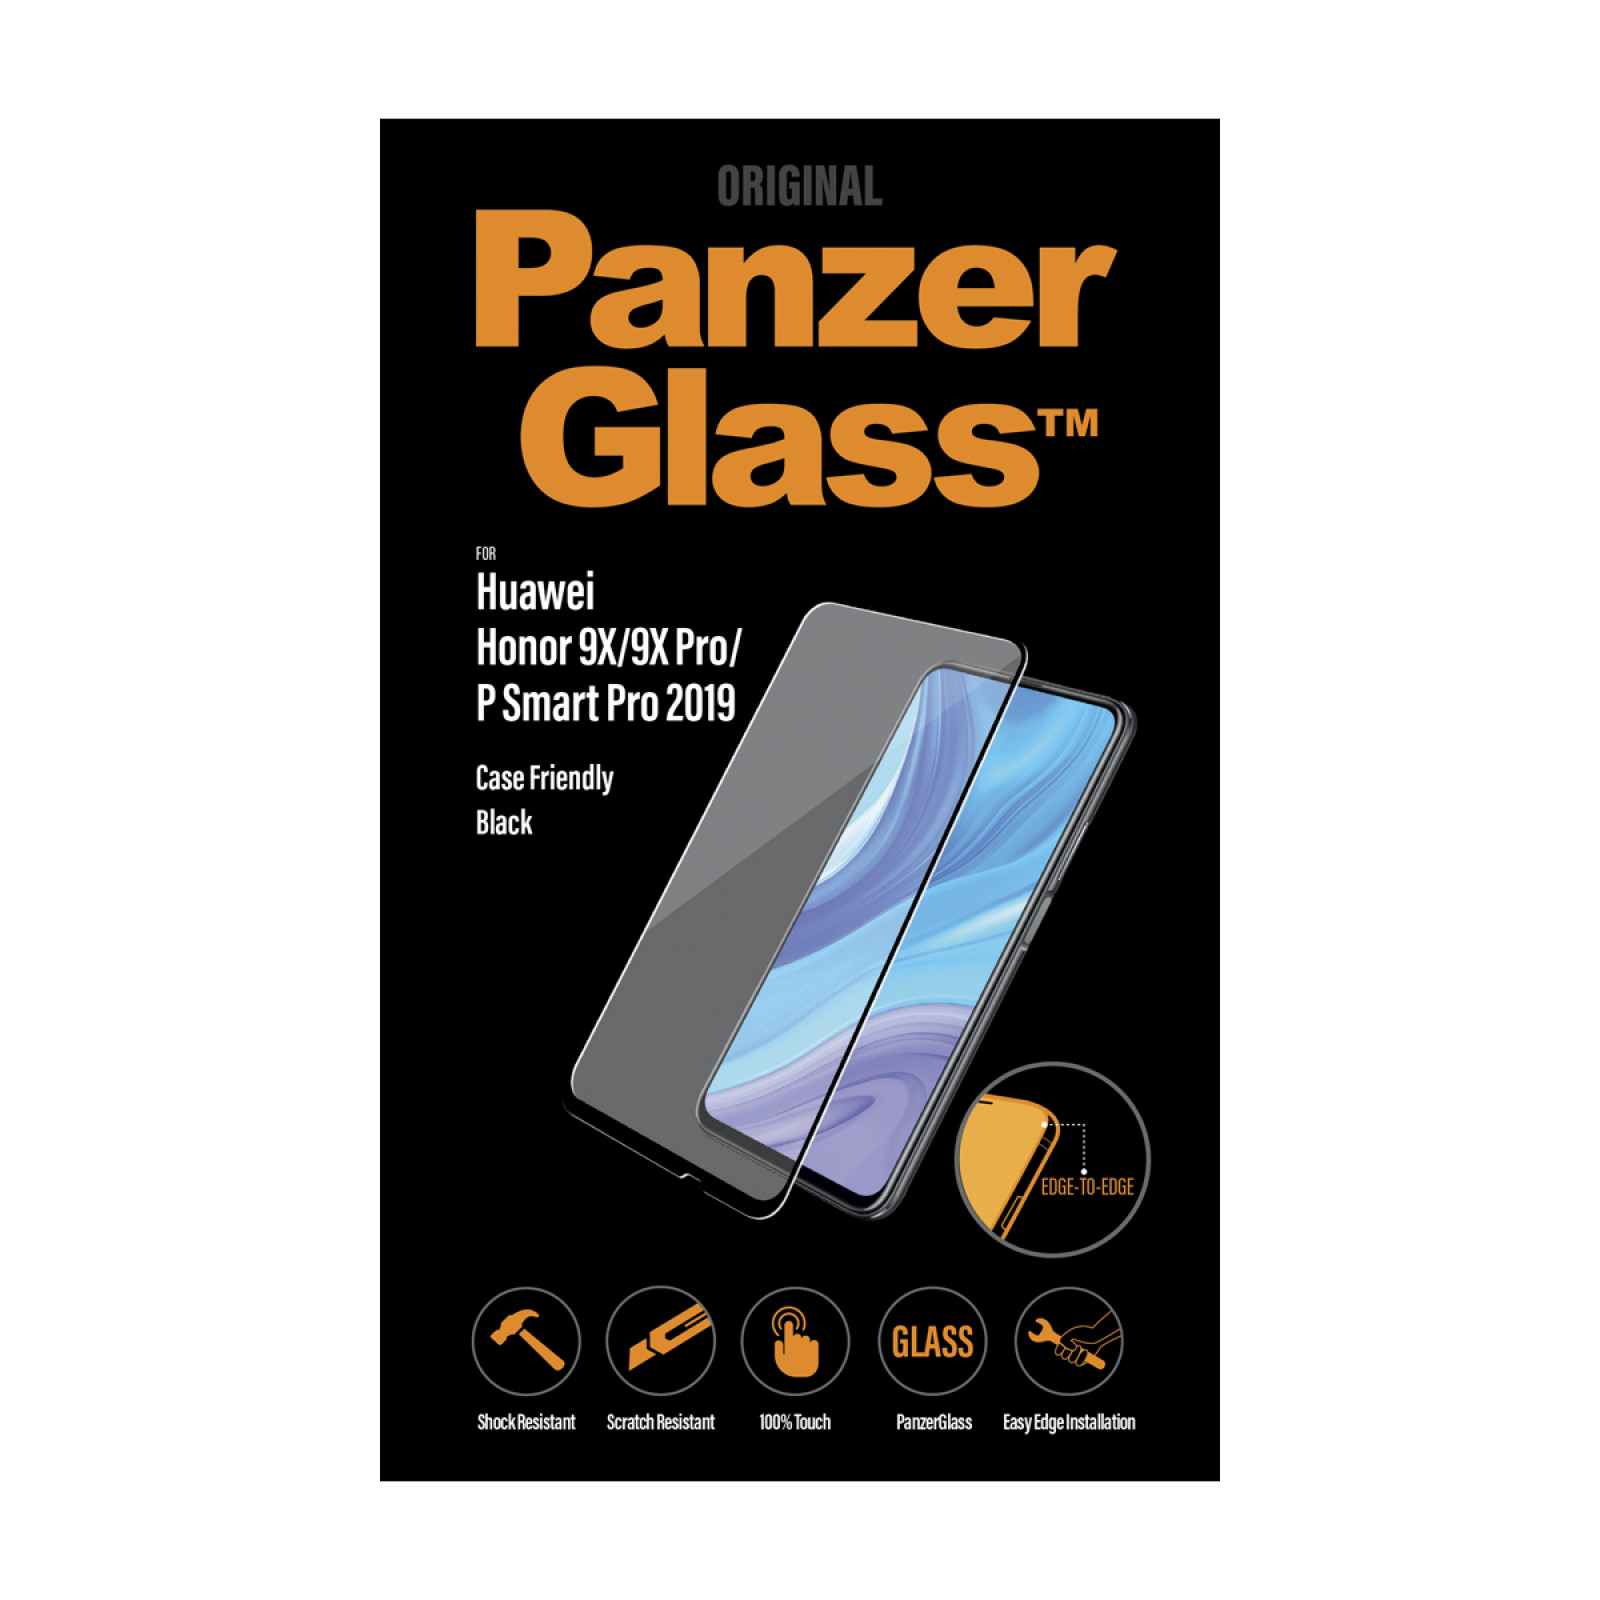 Стъклен протектор Huawei P smart Z 2019/Y9 Prime 2019/P smart Pro/Honor 9x PanzerGlass , CaseFriendly, Black, 117568